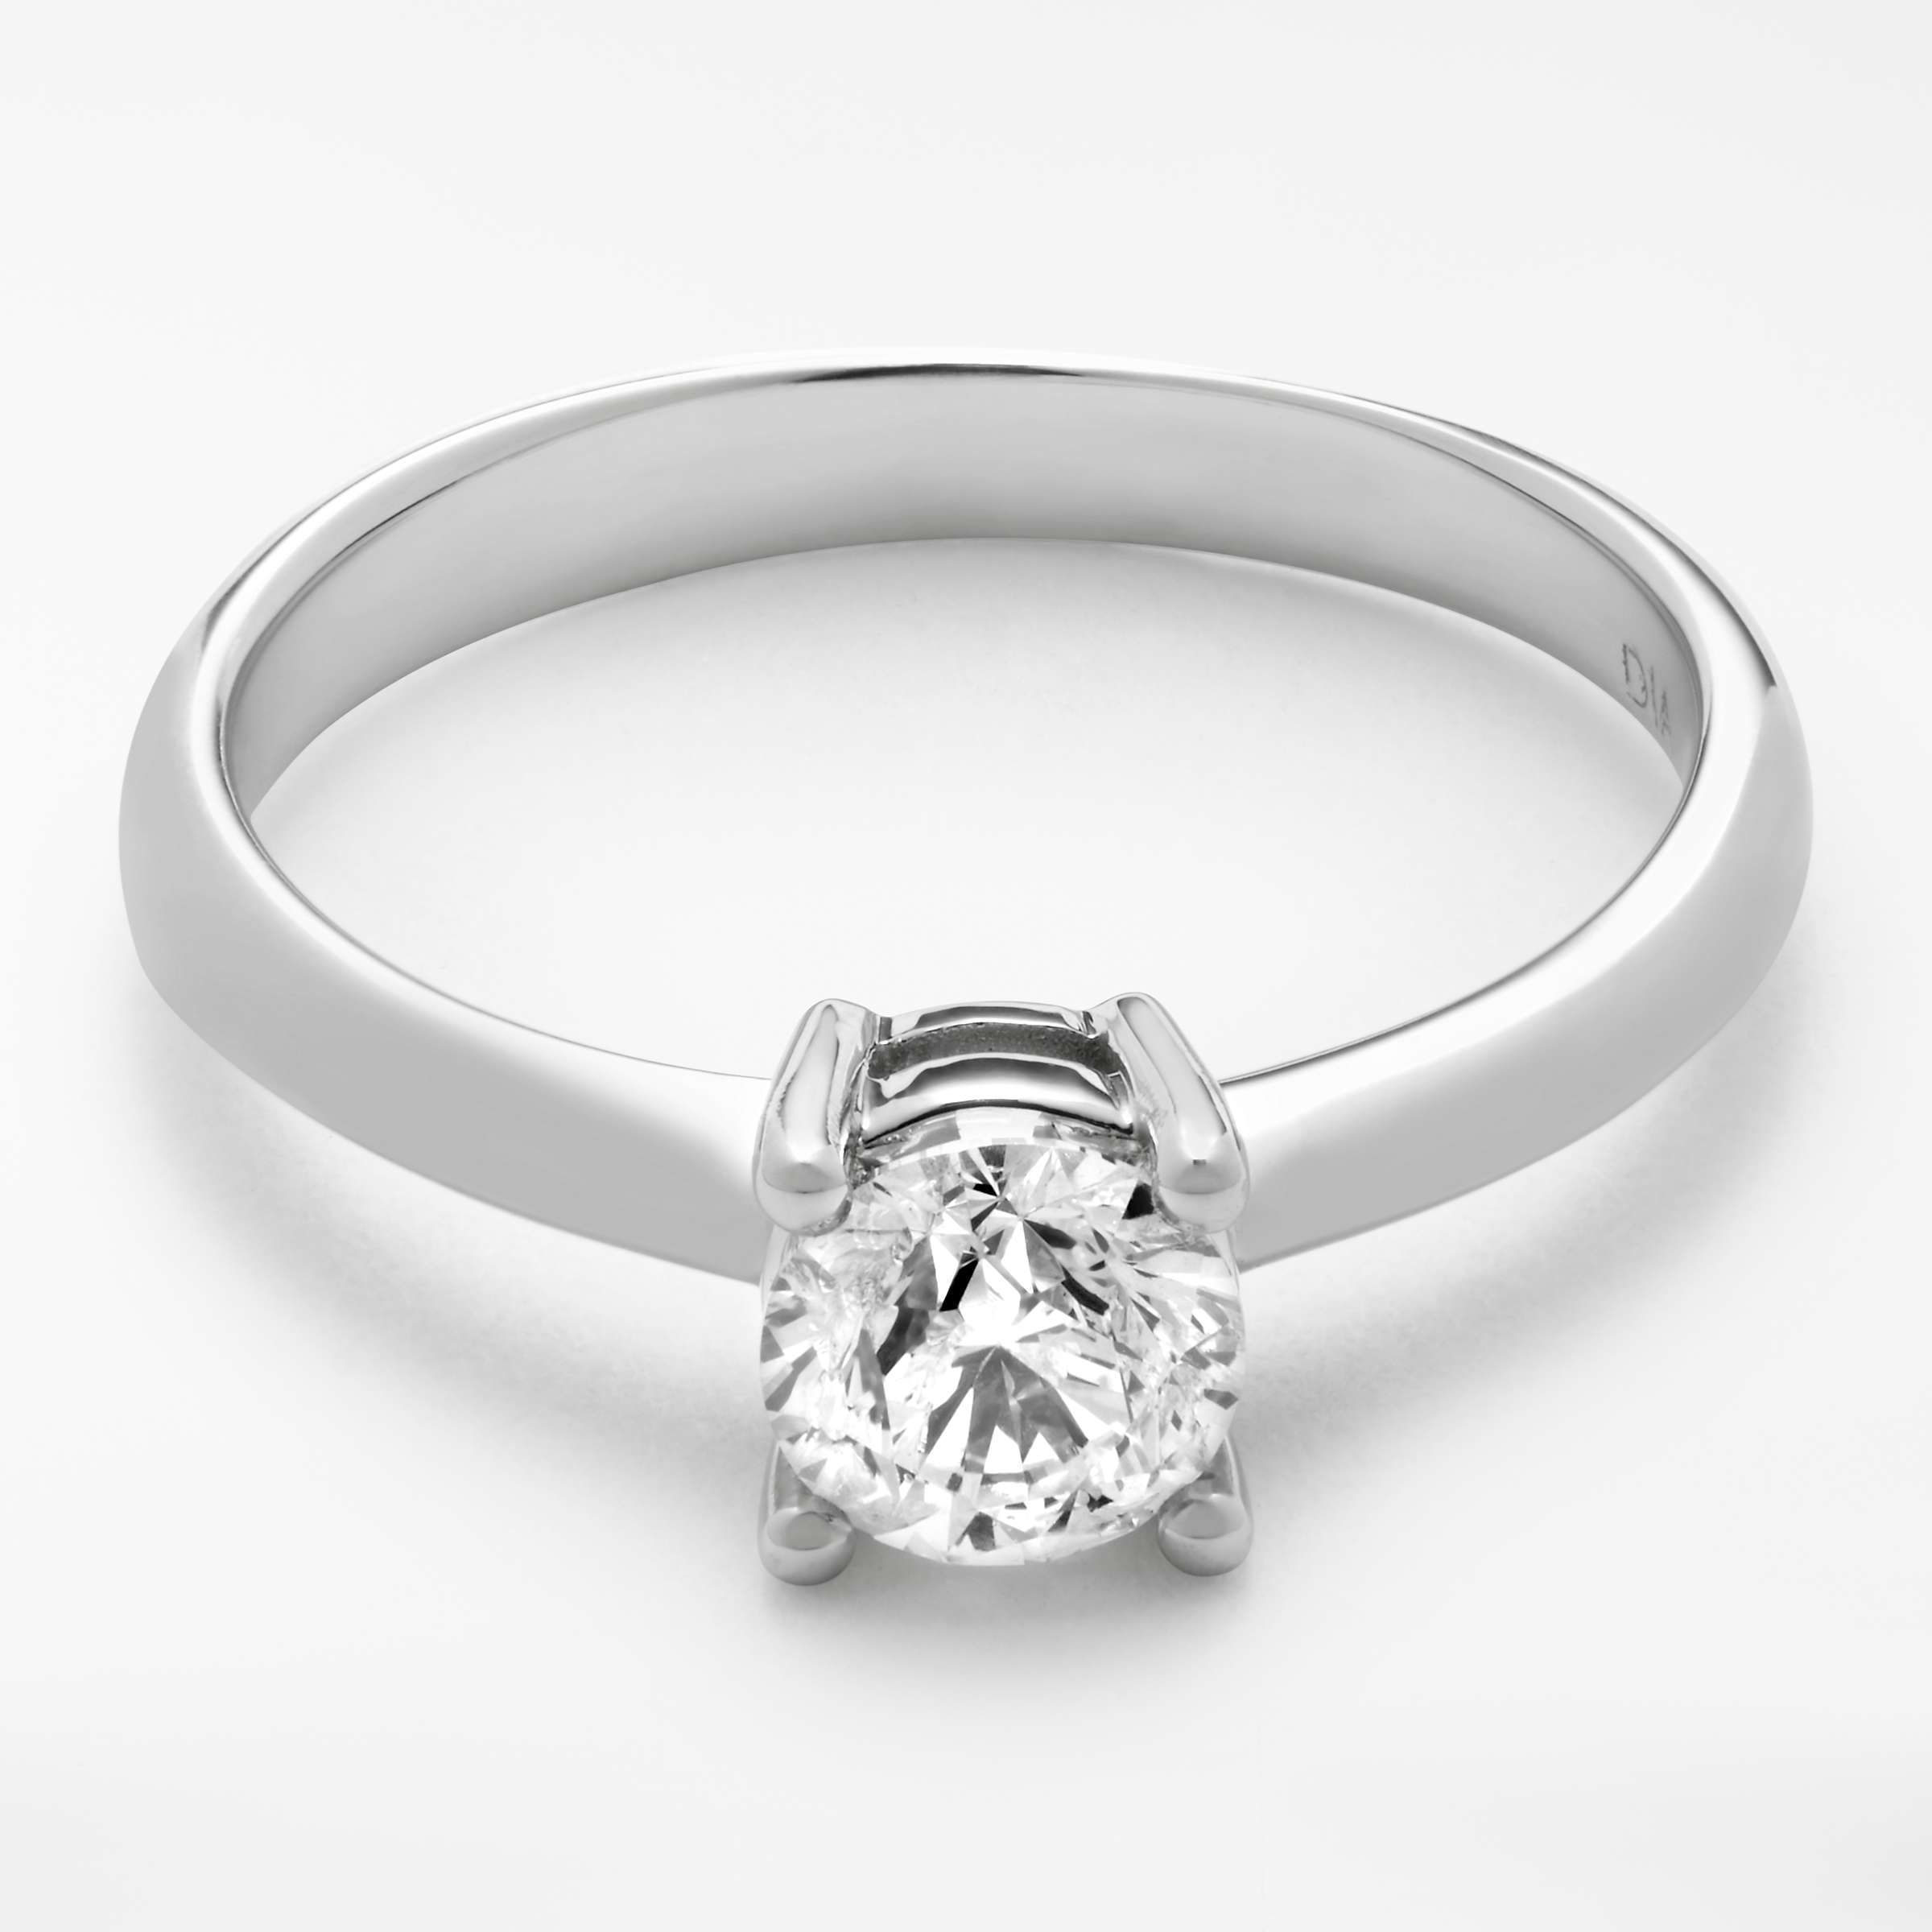 Buy Mogul 18ct White Gold Princess Cut Diamond Engagement Ring, 0.7ct Online at johnlewis.com